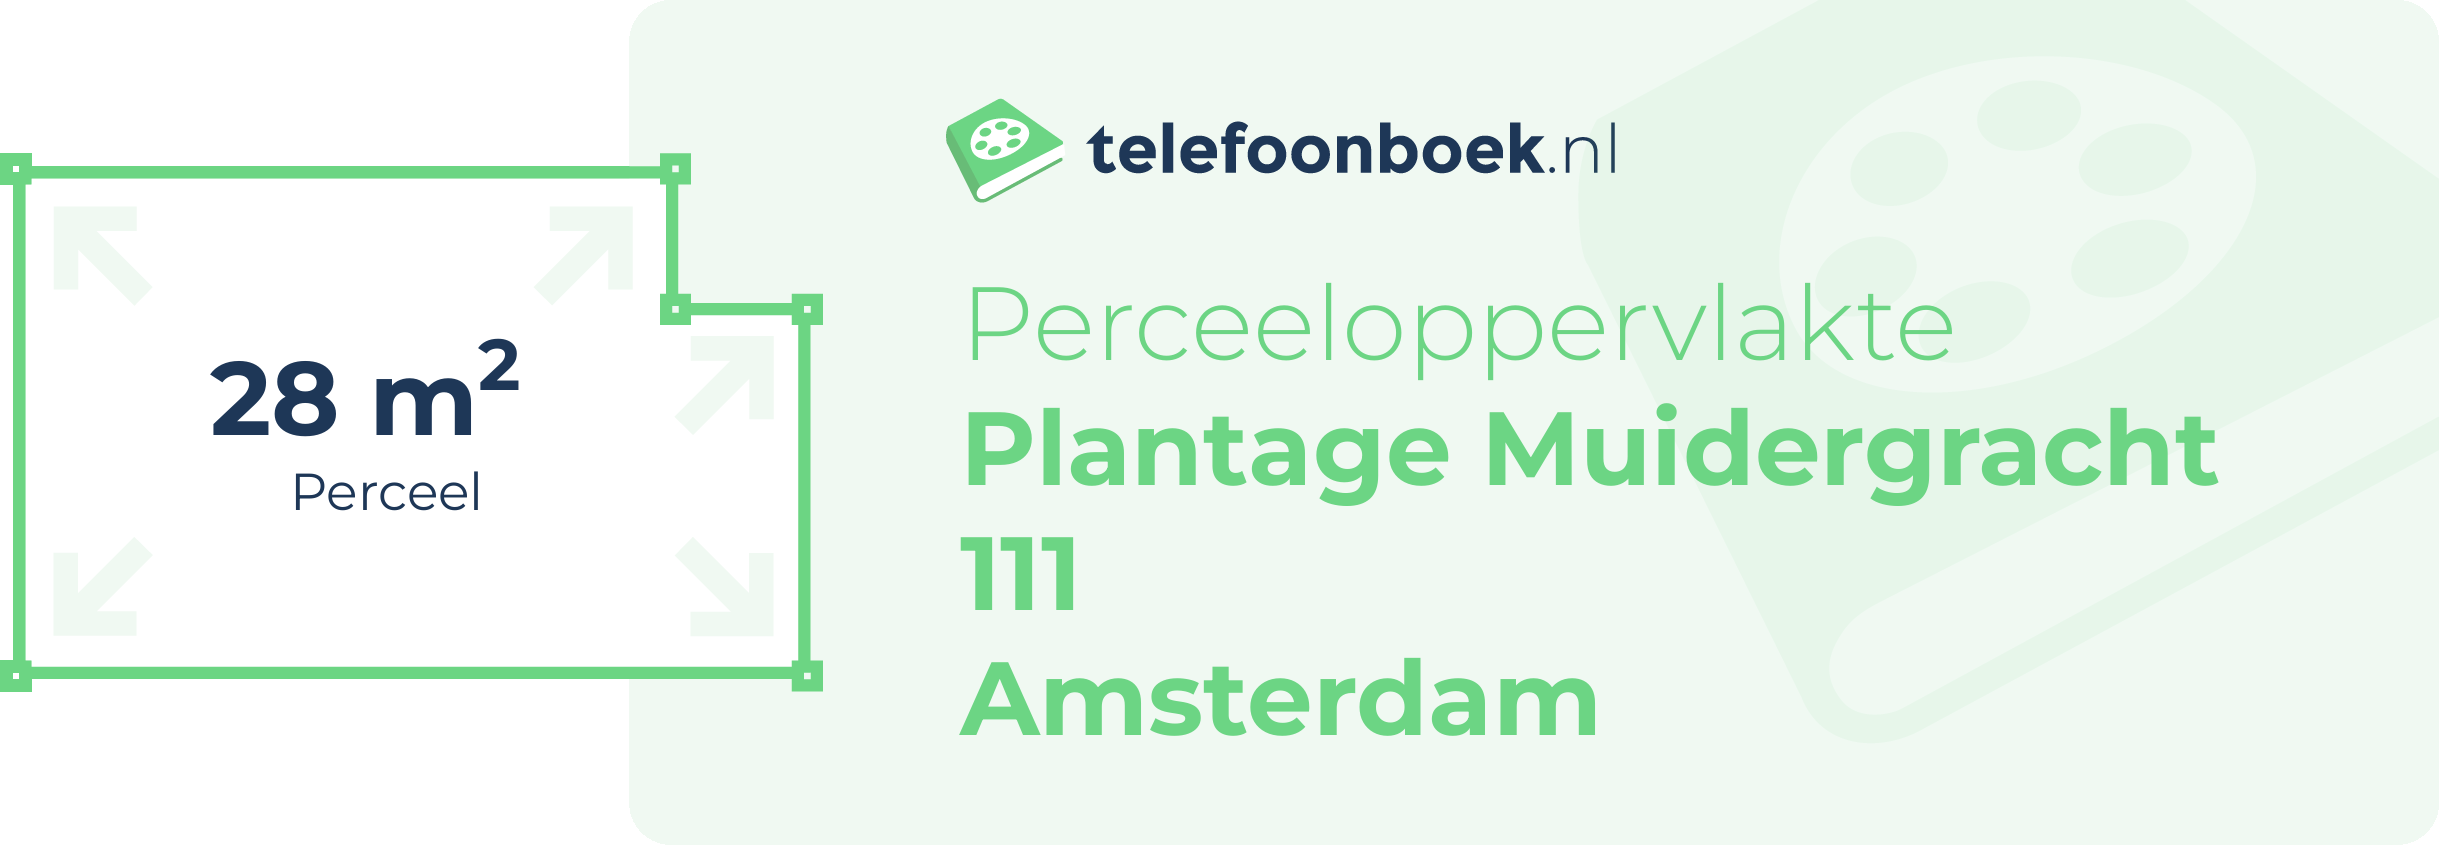 Perceeloppervlakte Plantage Muidergracht 111 Amsterdam